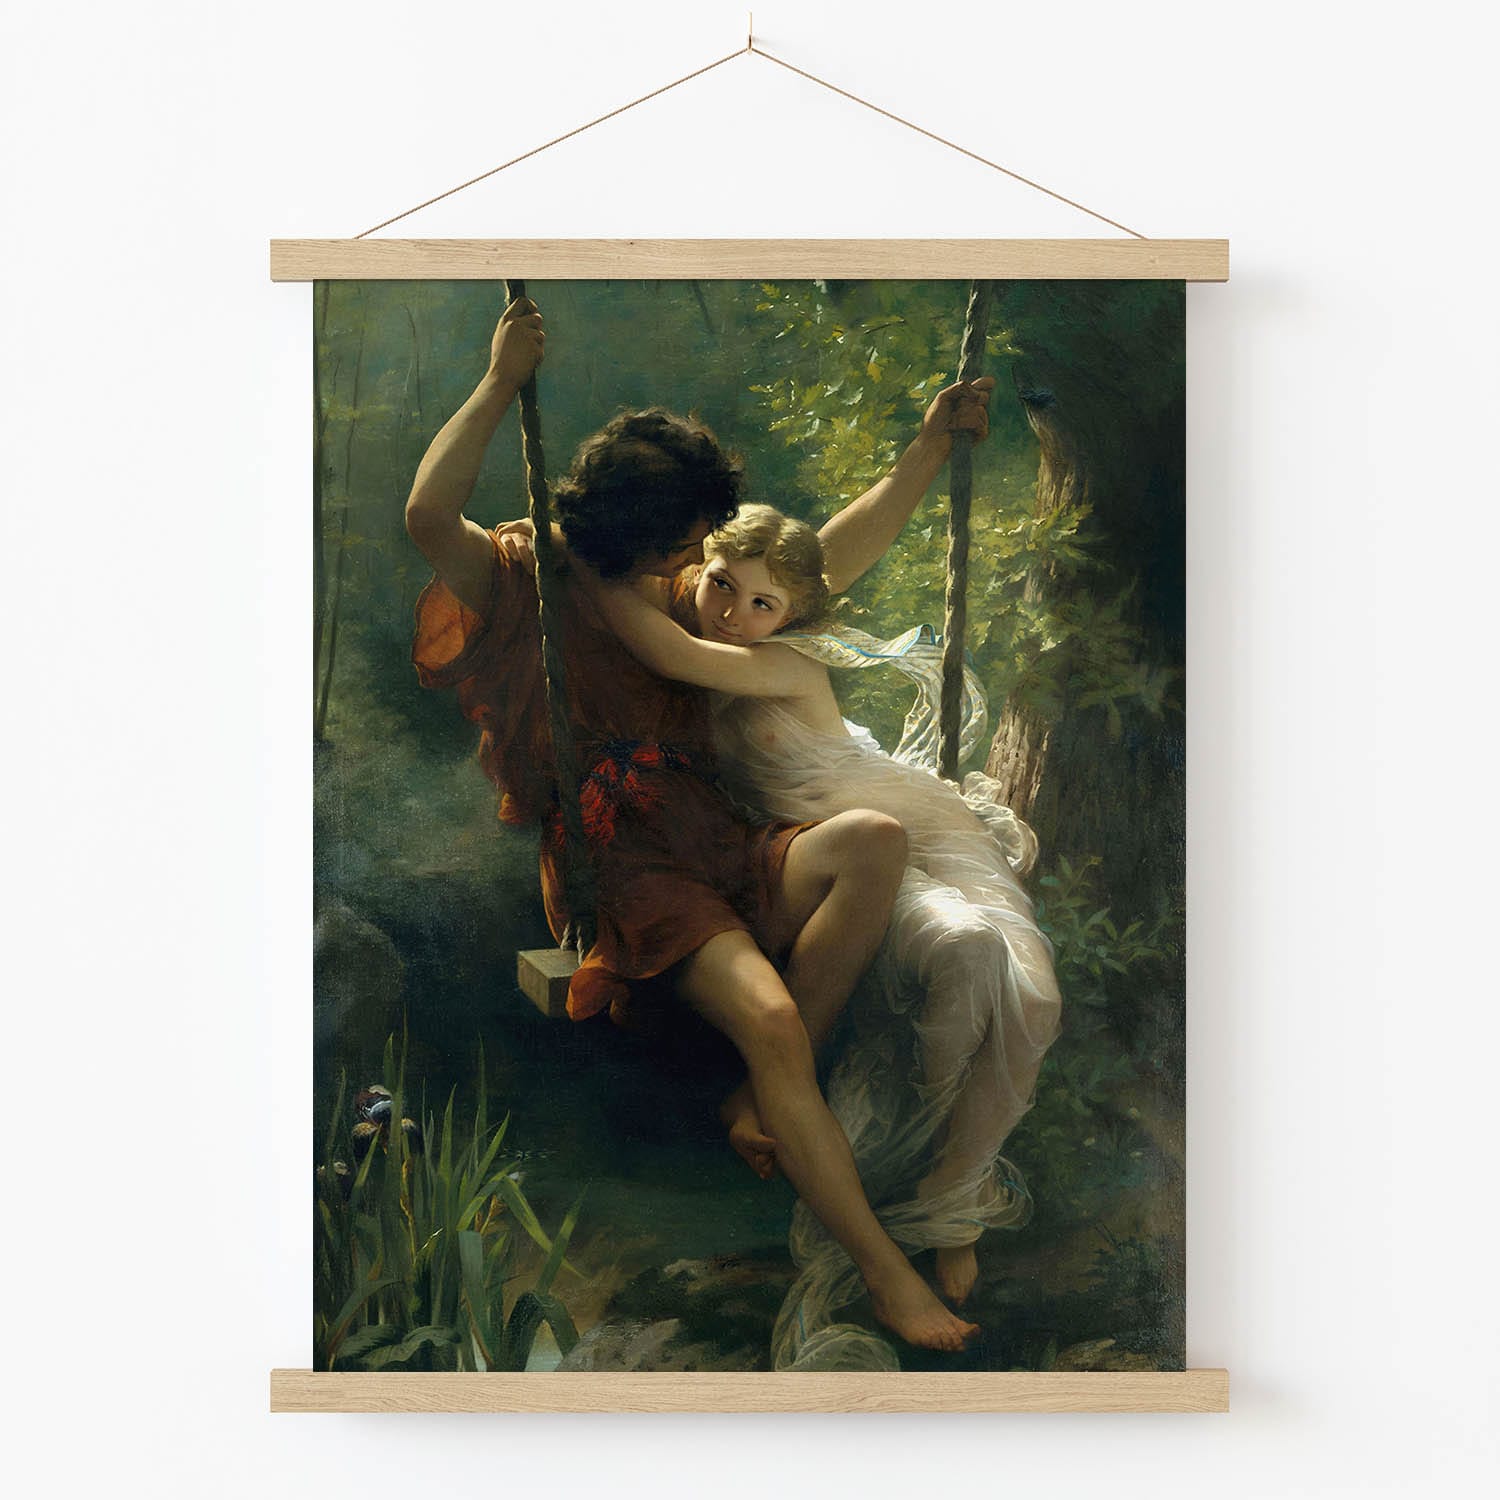 Lovers on a Swing Art Print in Wood Hanger Frame on Wall